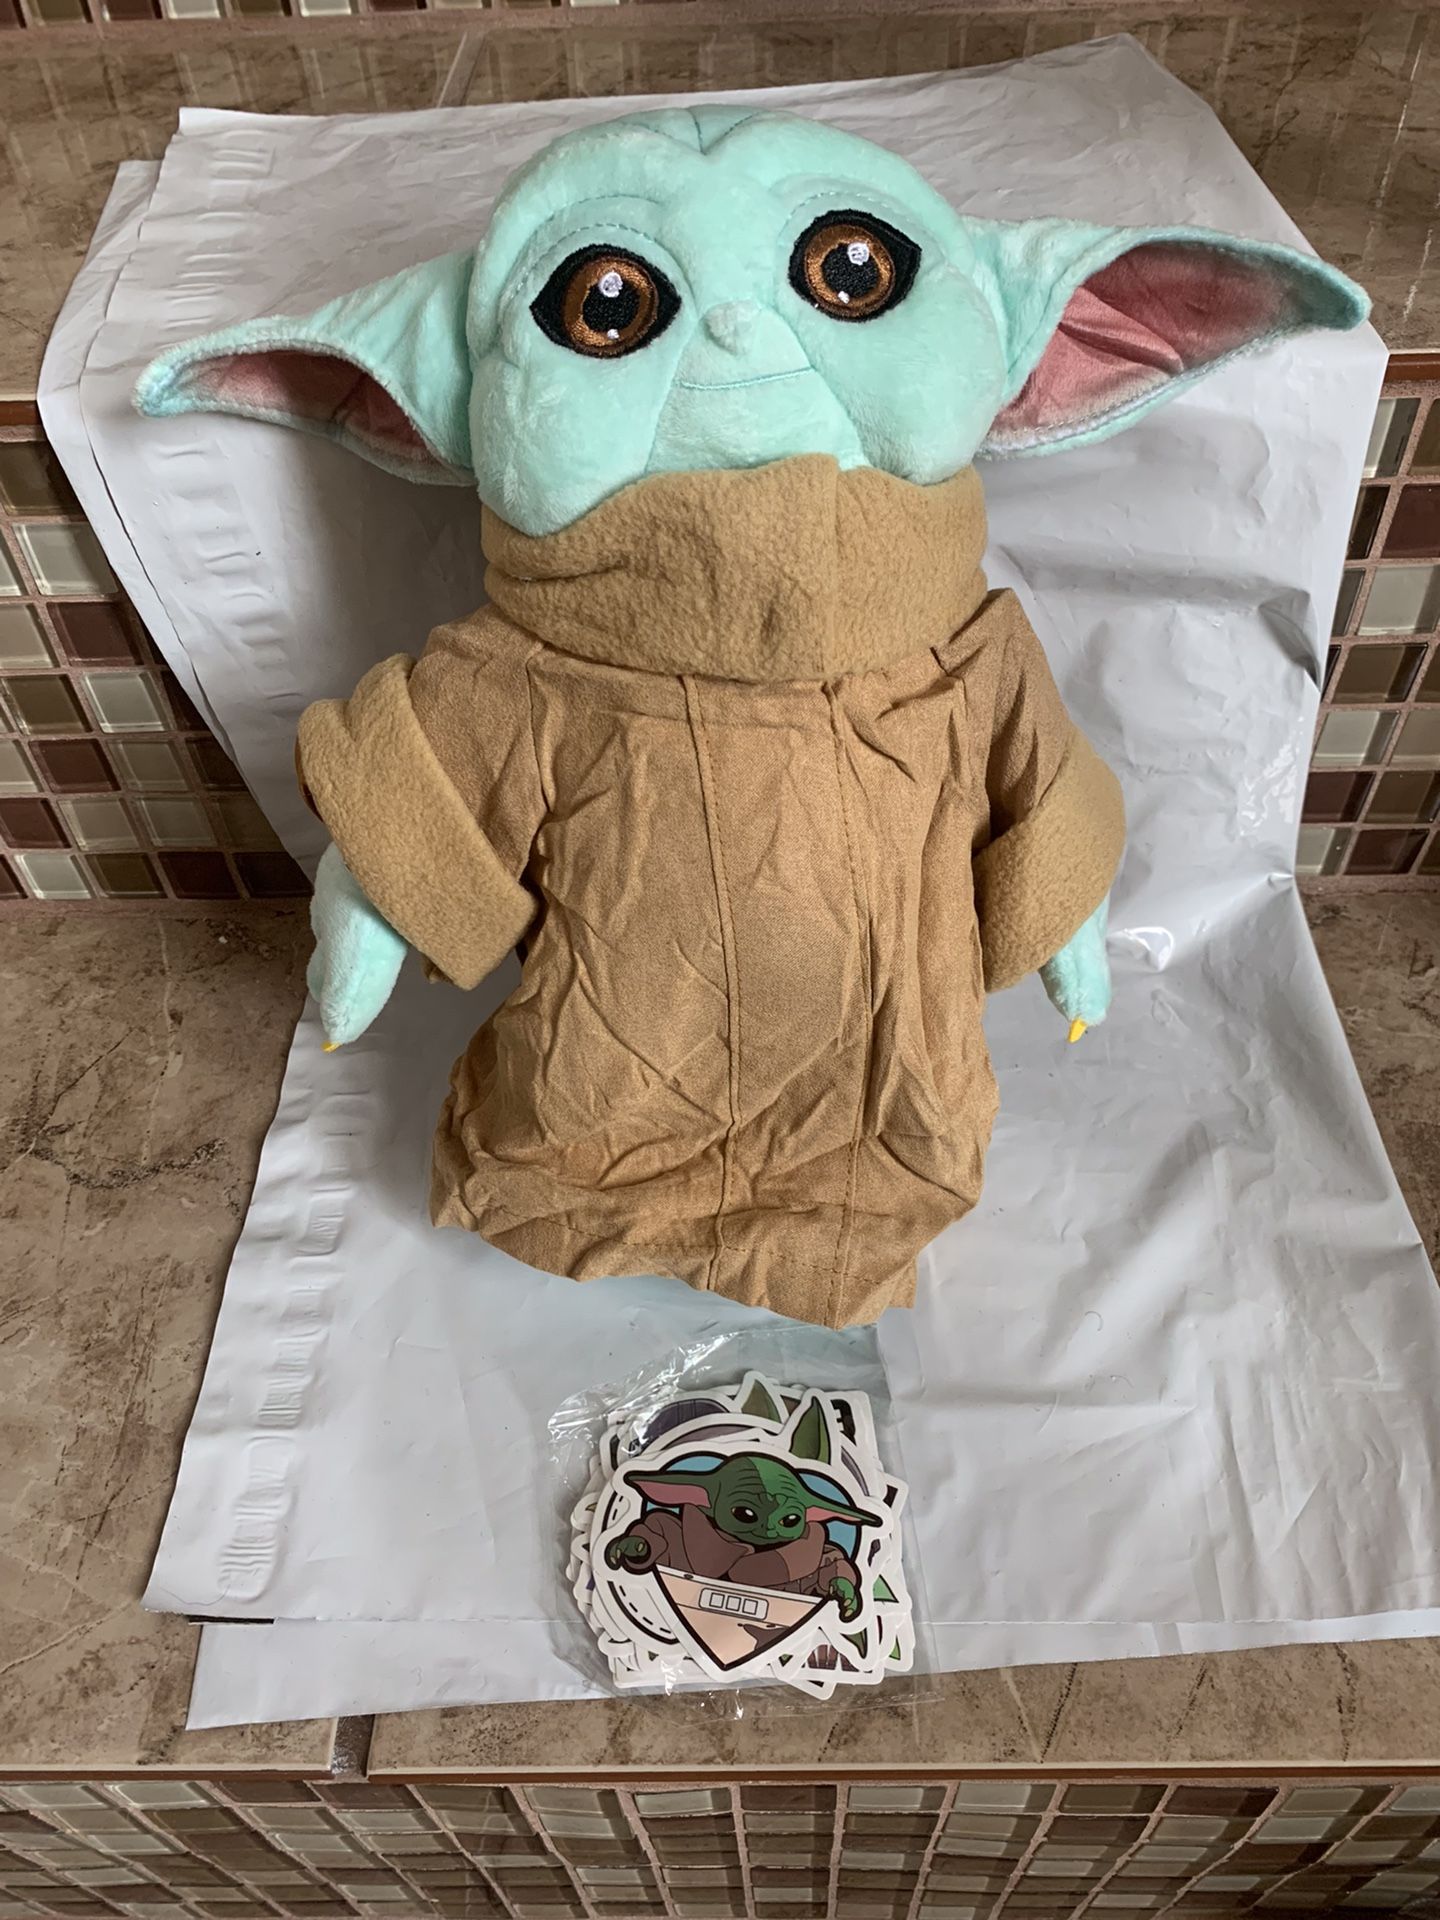 Baby Yoda Doll (Mandalorian ) 11 inch Plush Toy + Baby Yoda Stickers. NEW